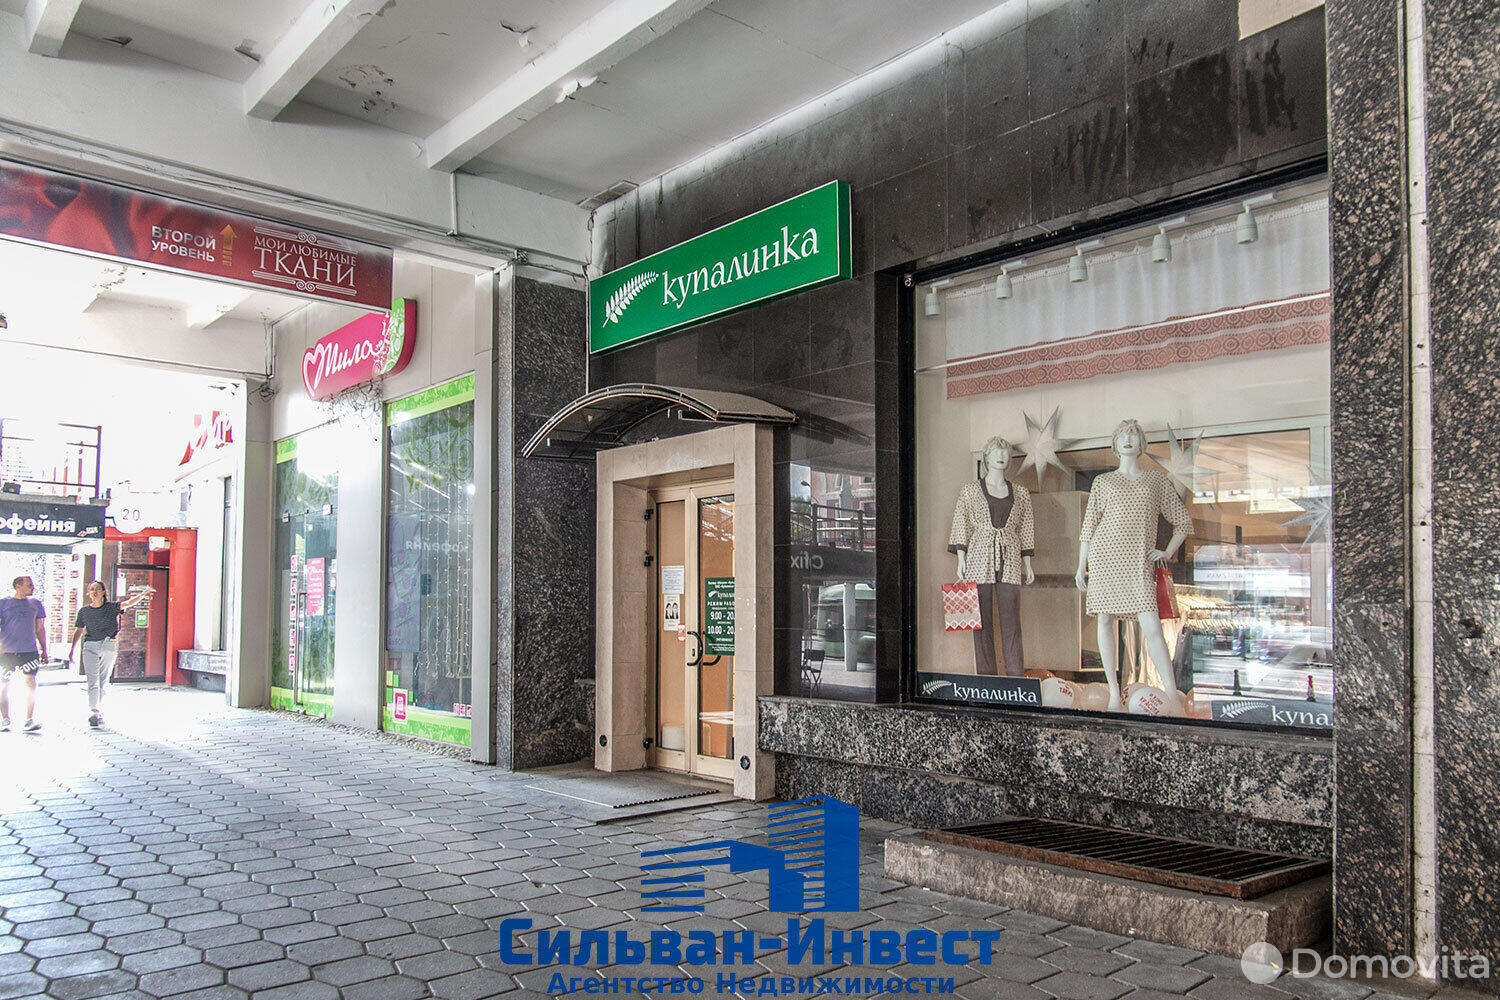 Аренда торговой точки на ул. Немига, д. 12/А в Минске, 5025EUR, код 964415 - фото 1